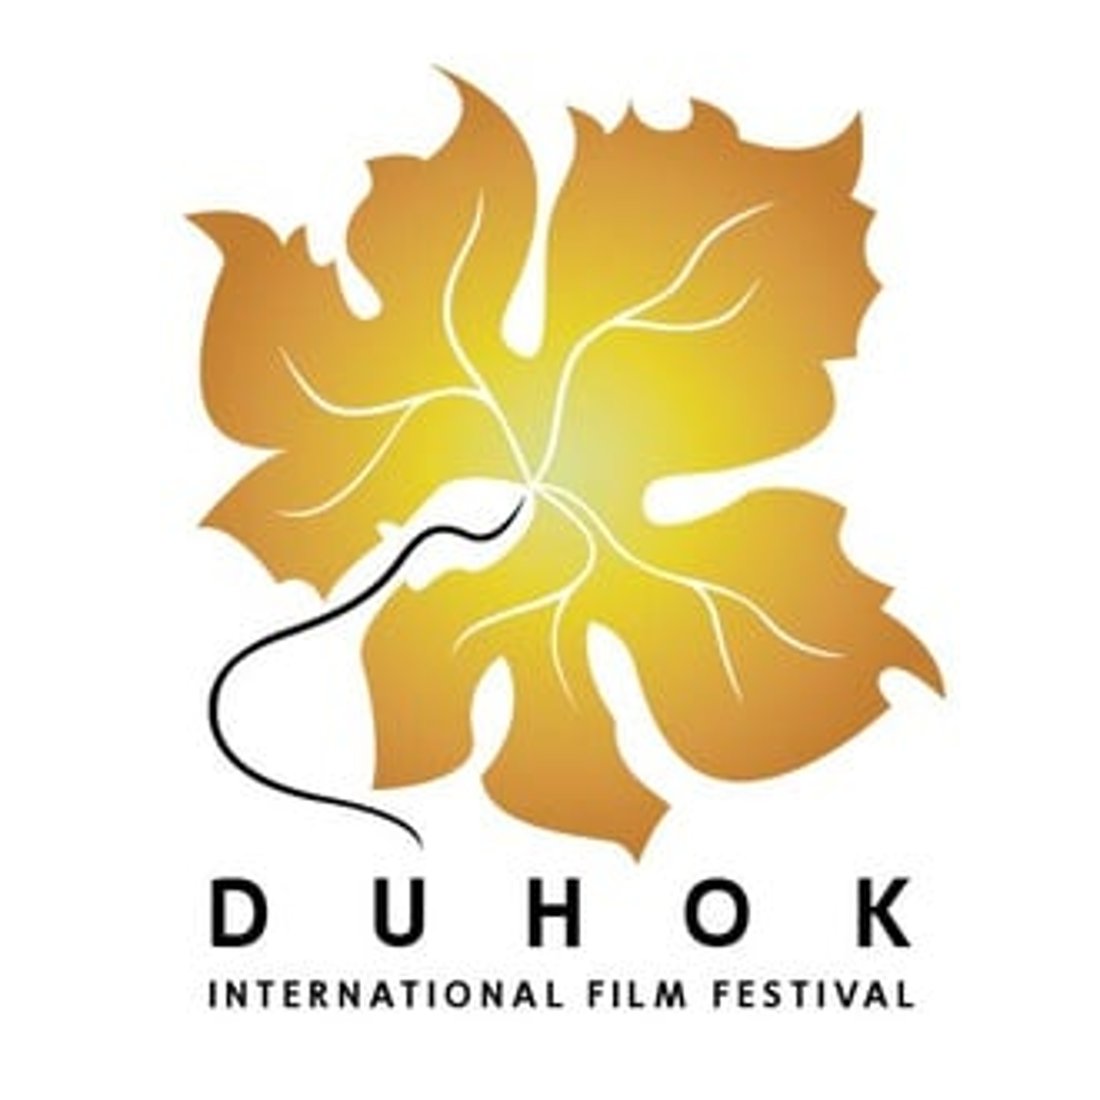 Duhok international film festival’s 10th edition unveils diverse film selection